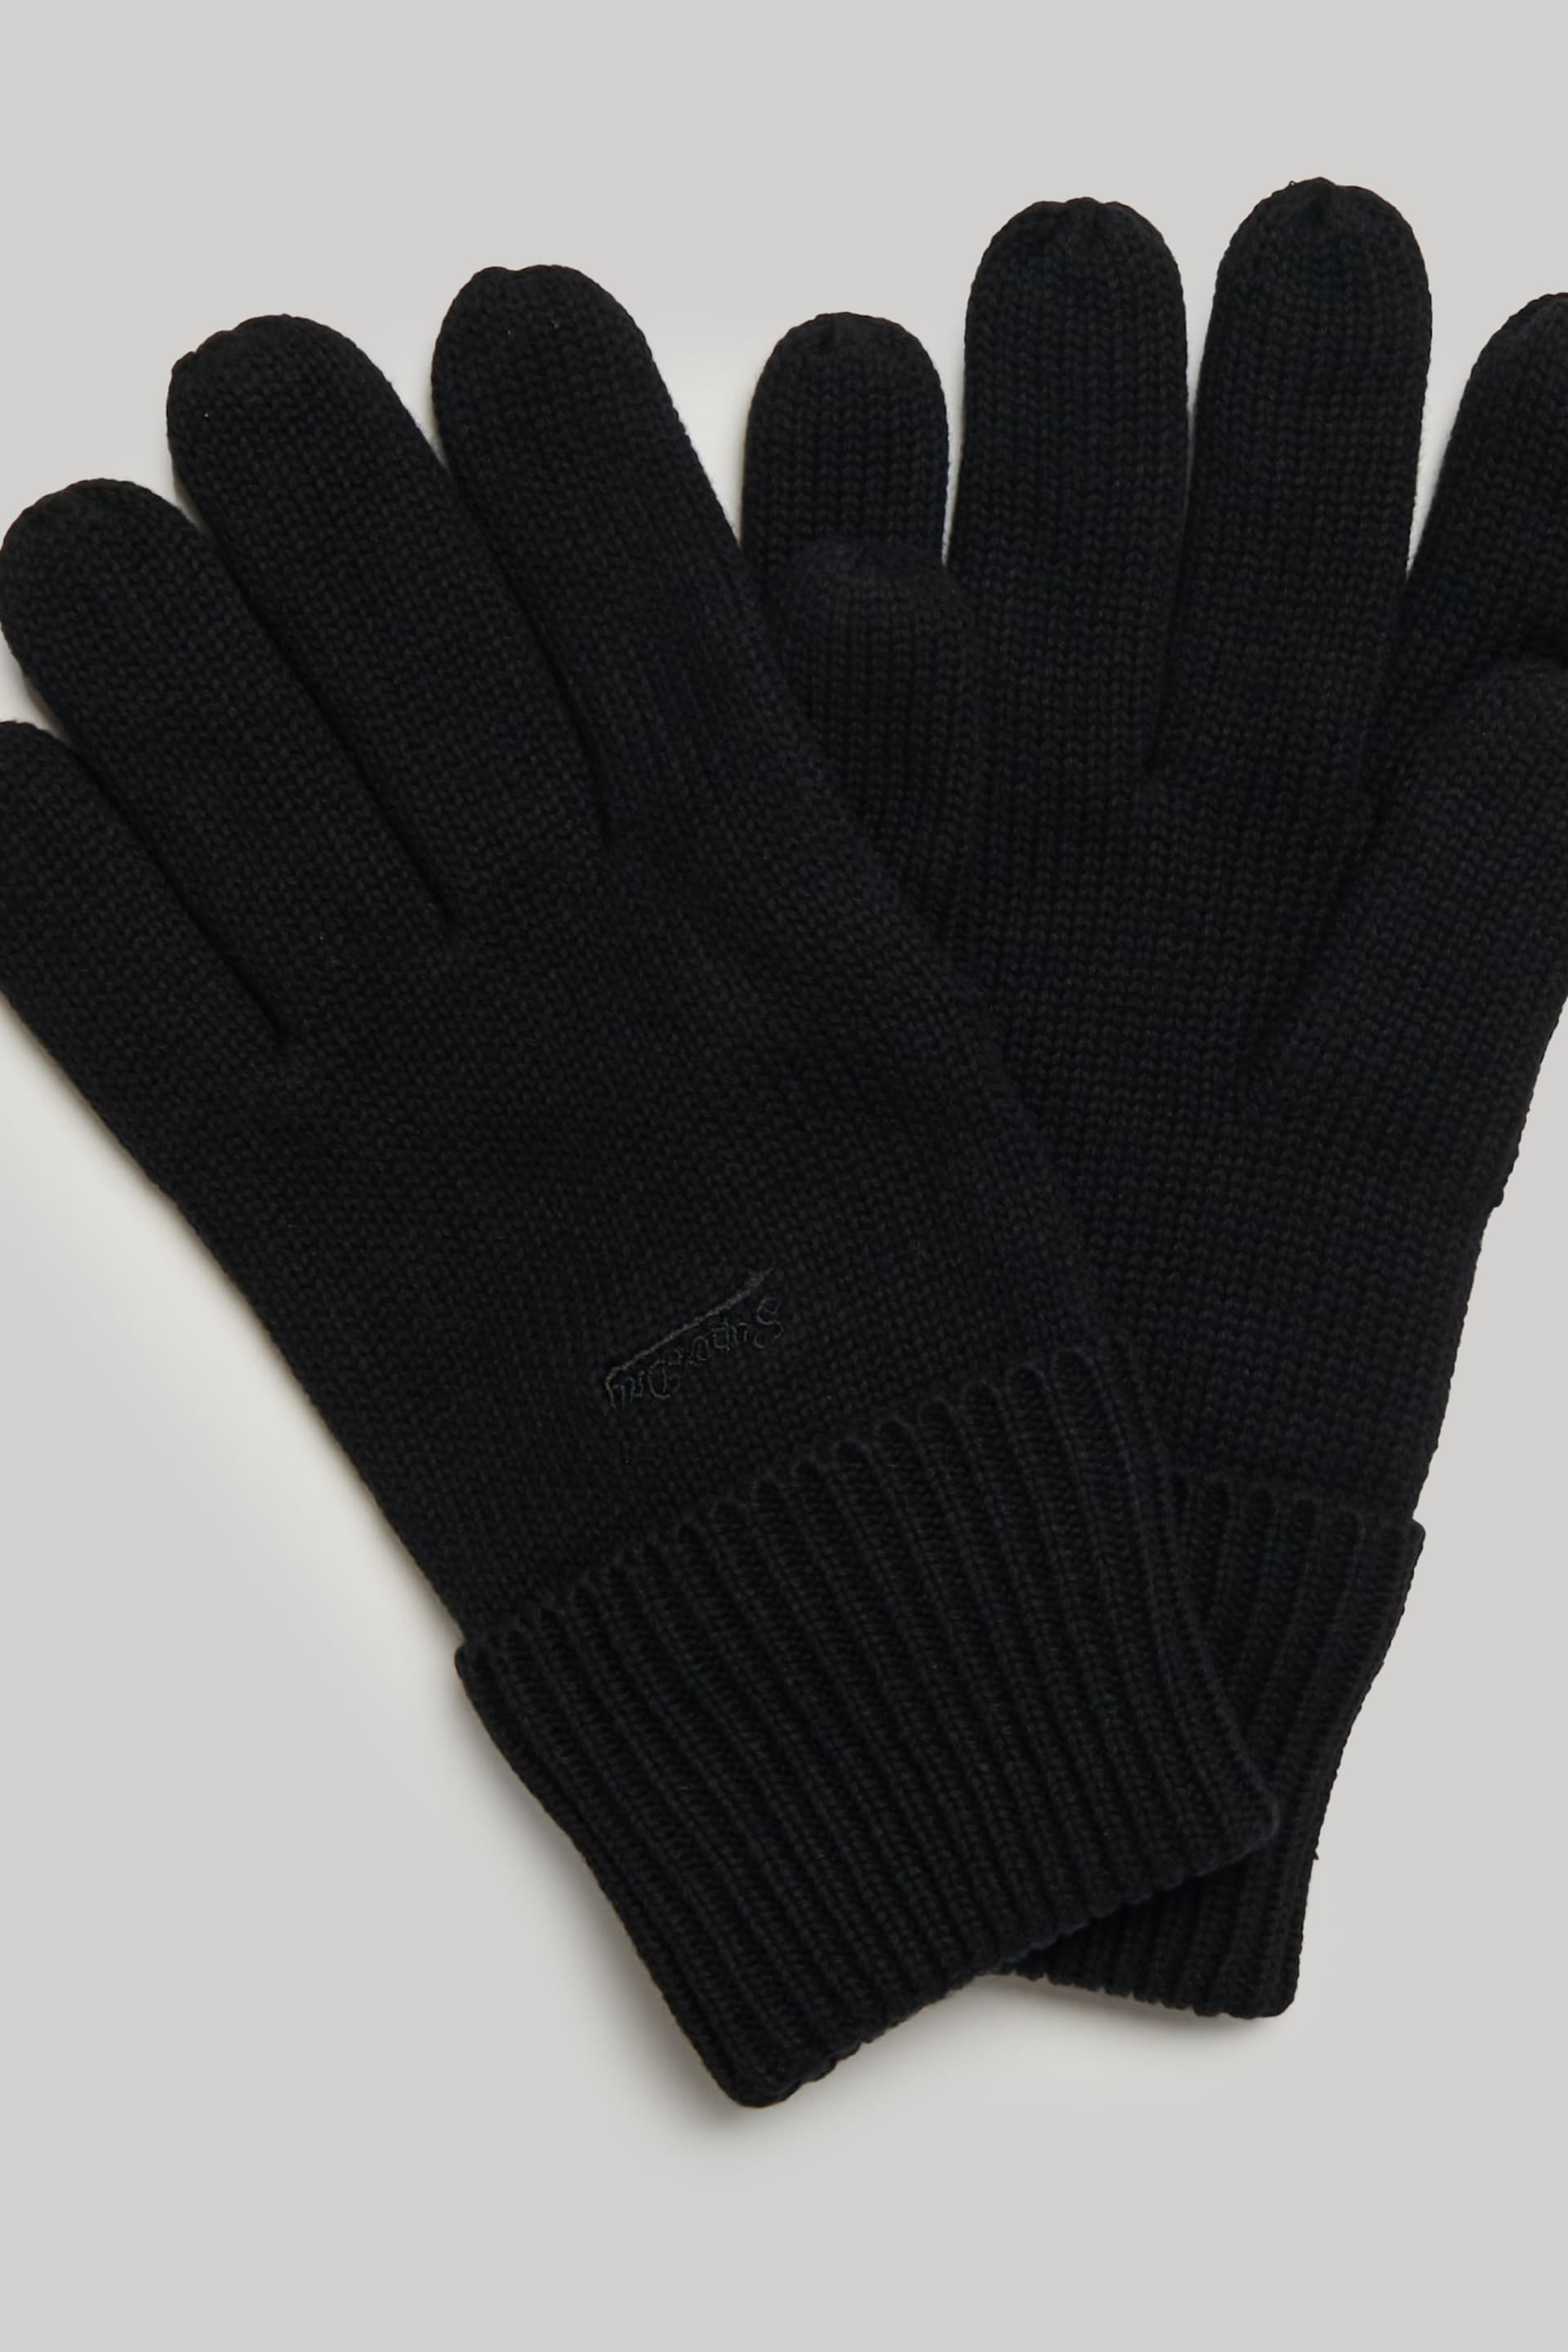 Superdry Black Knitted Logo Gloves - Image 2 of 3